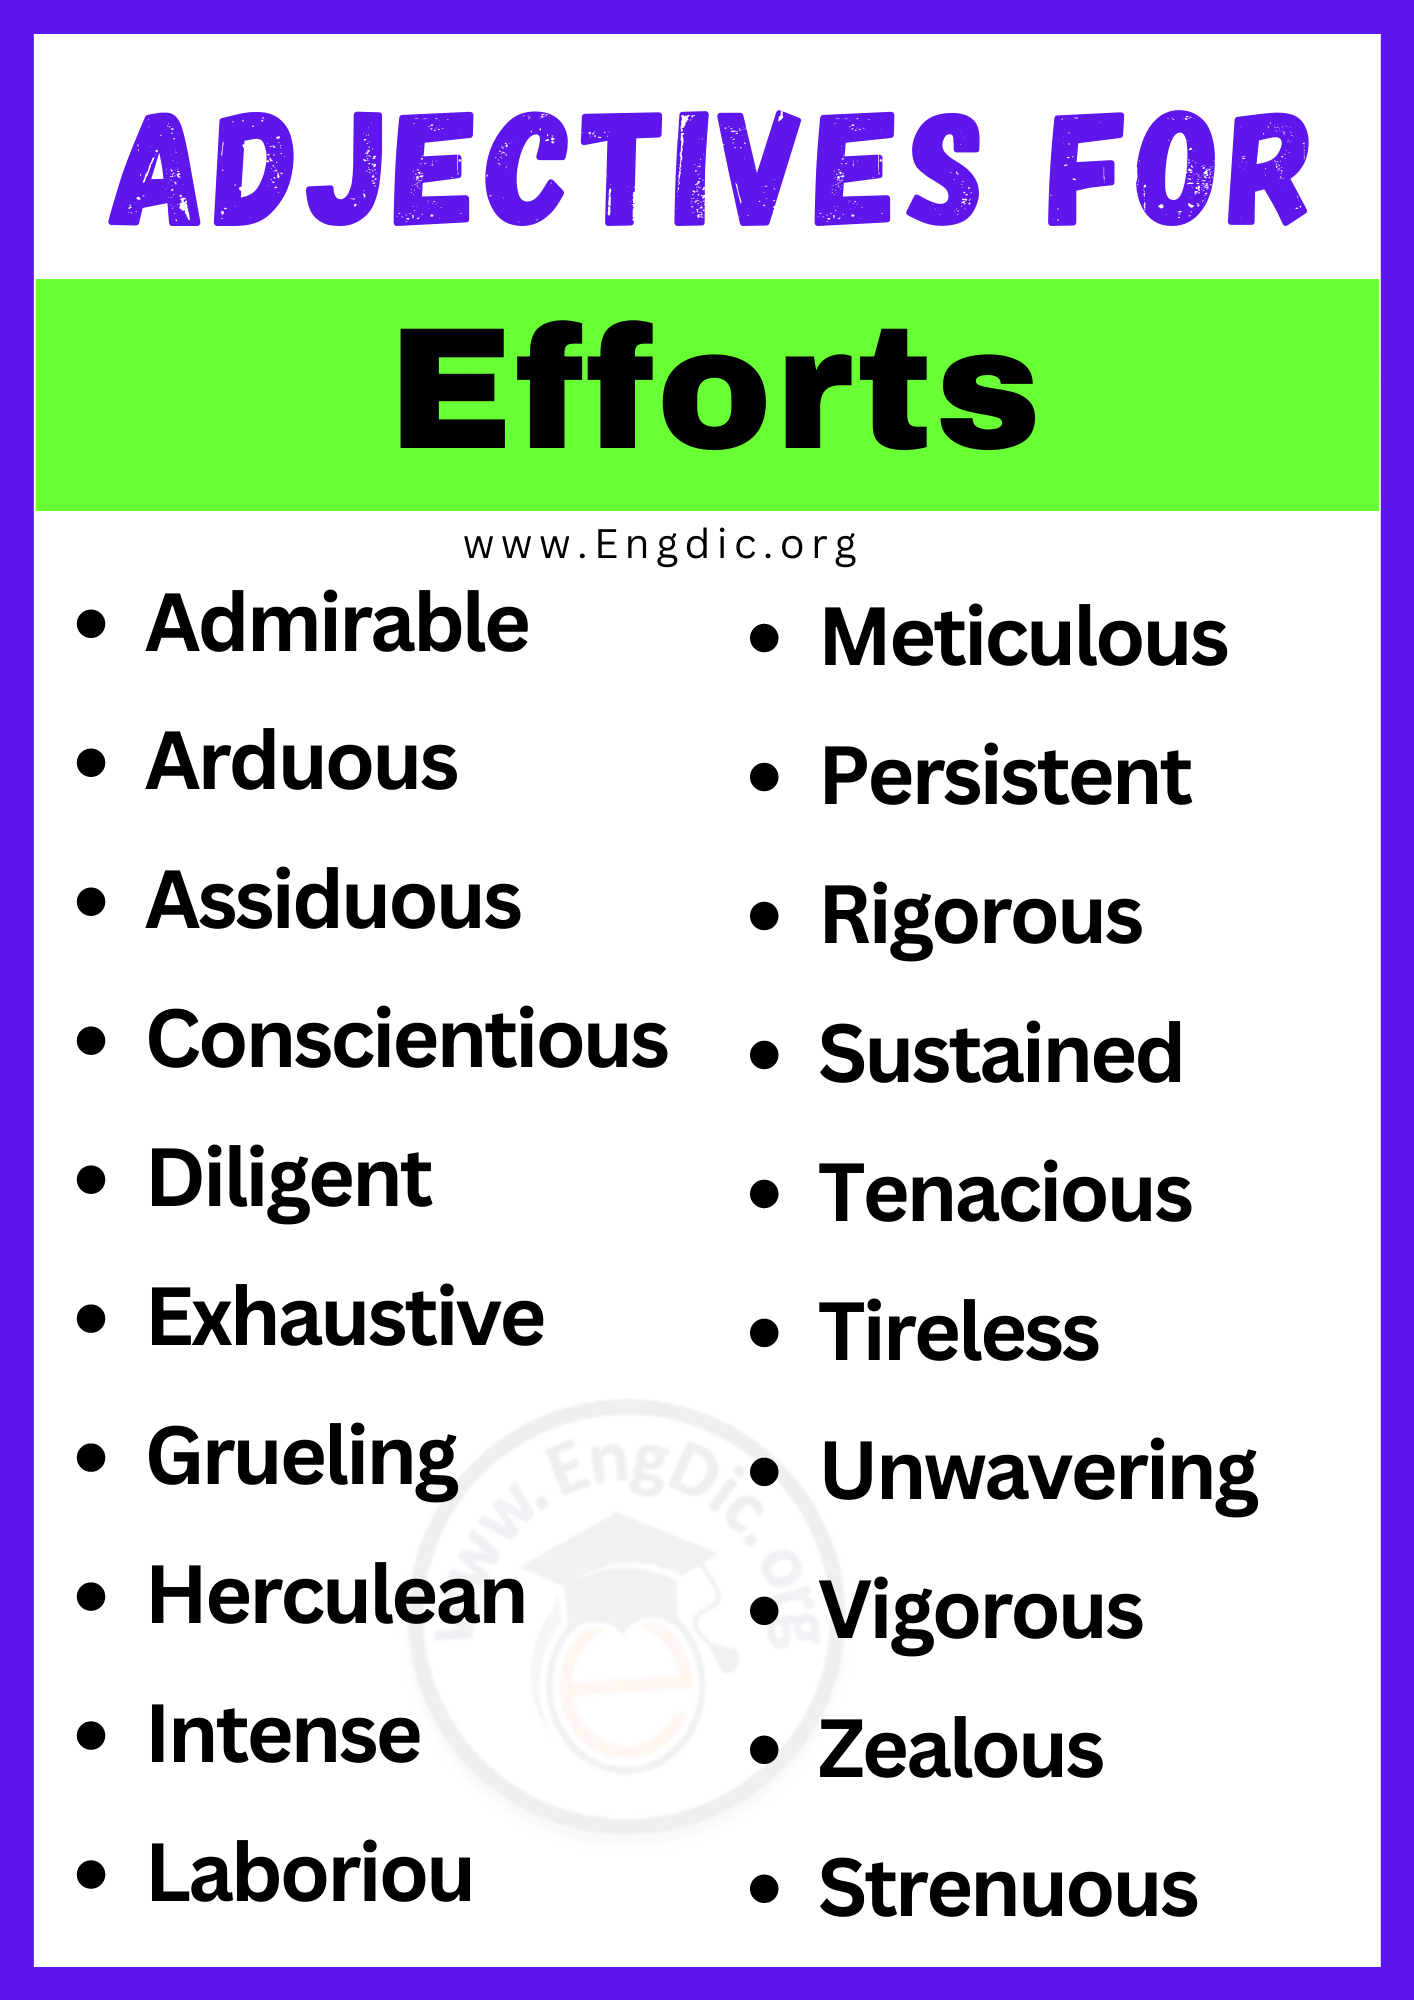 Adjectives for Efforts